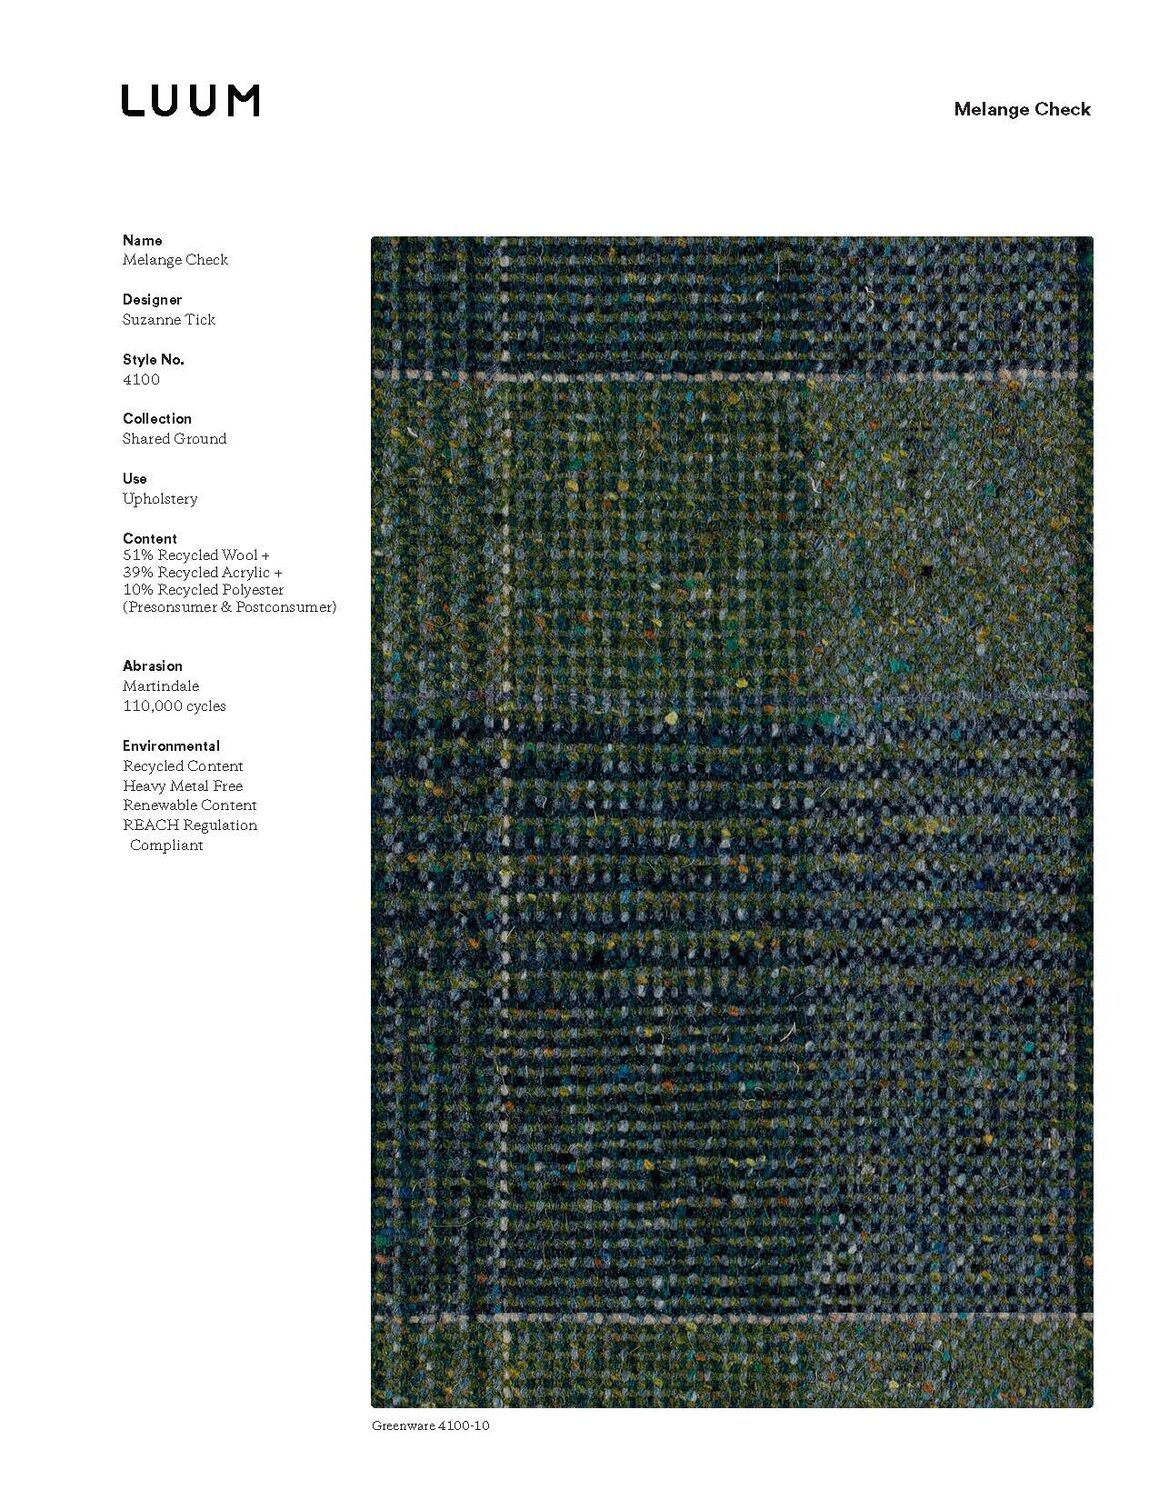 Melange Check - Faience Blue - 4100 - 09 Sample Card